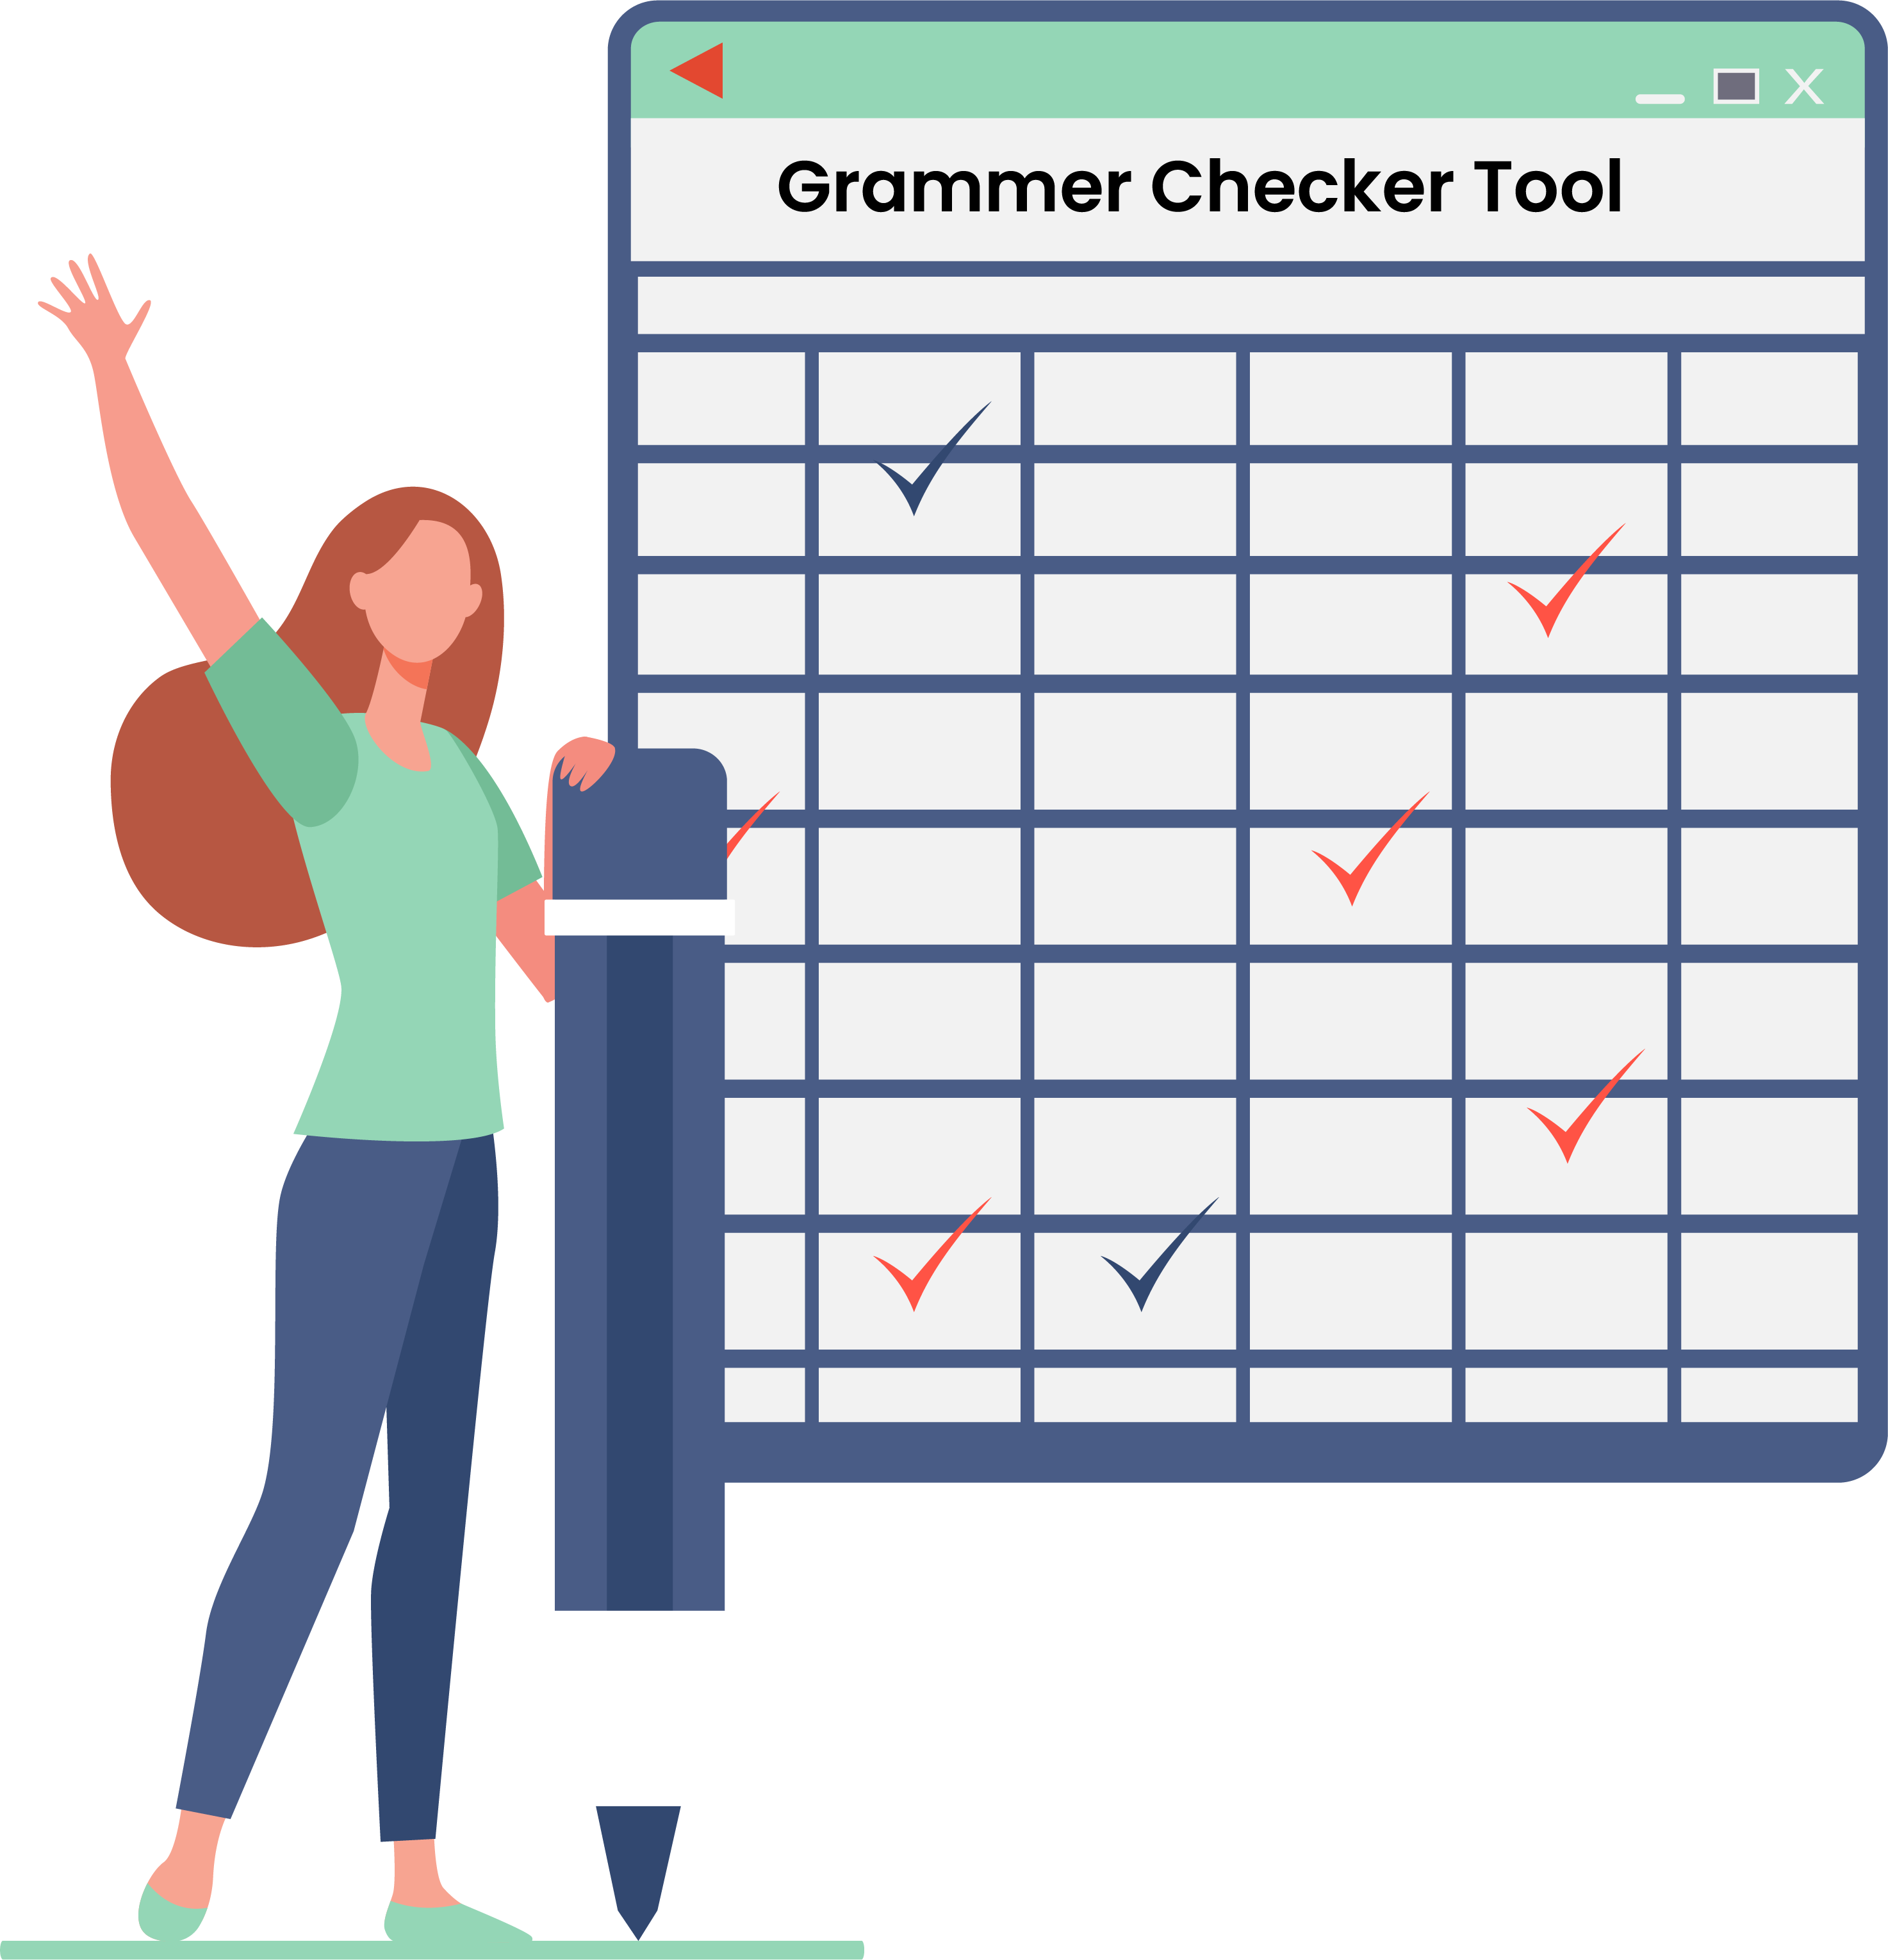 ETTVI’s Grammar Checker Tool